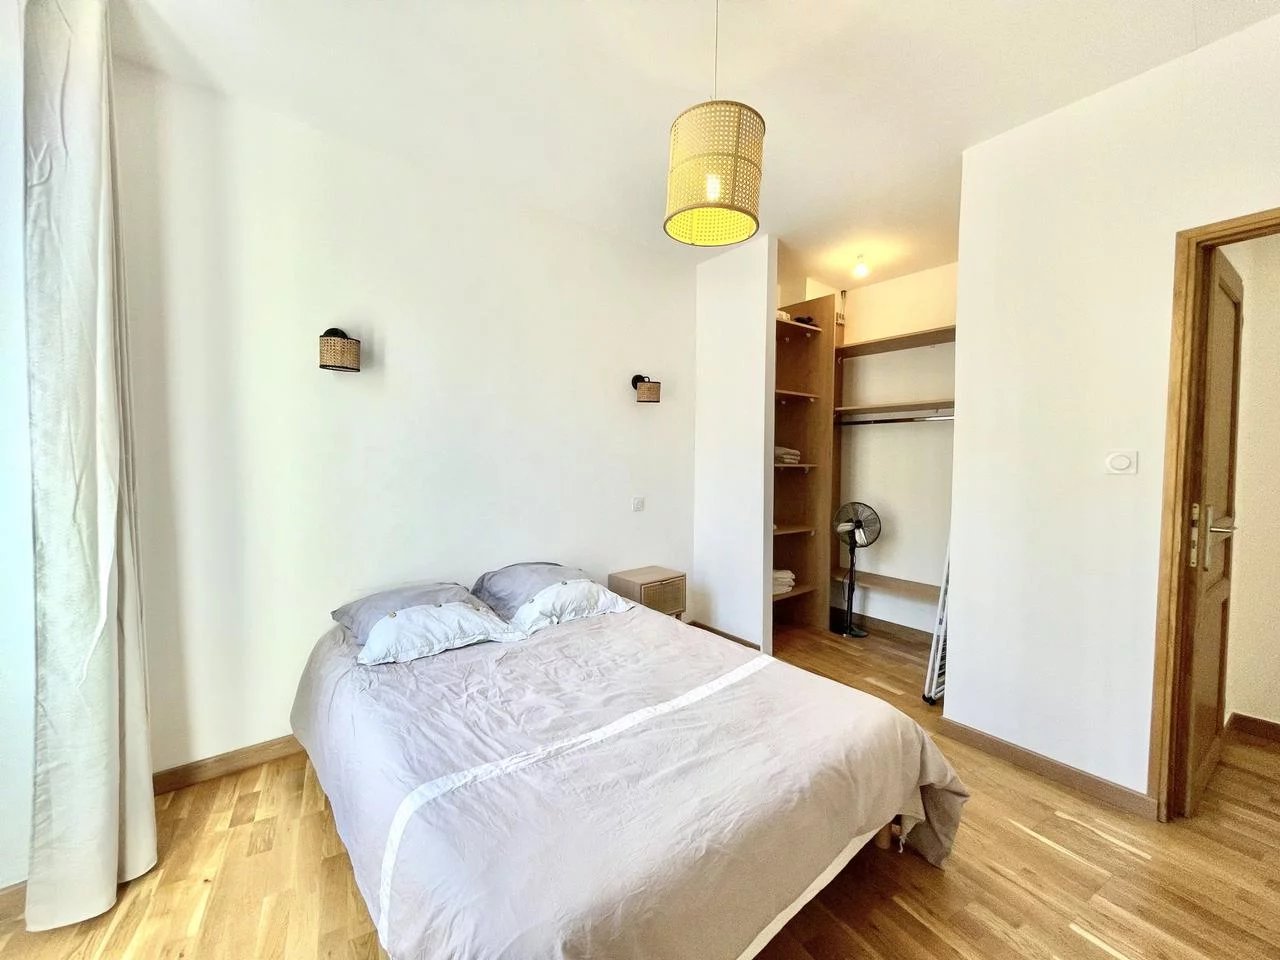 Appartement  3 Locali 49.92m2  In vendita   189 000 €